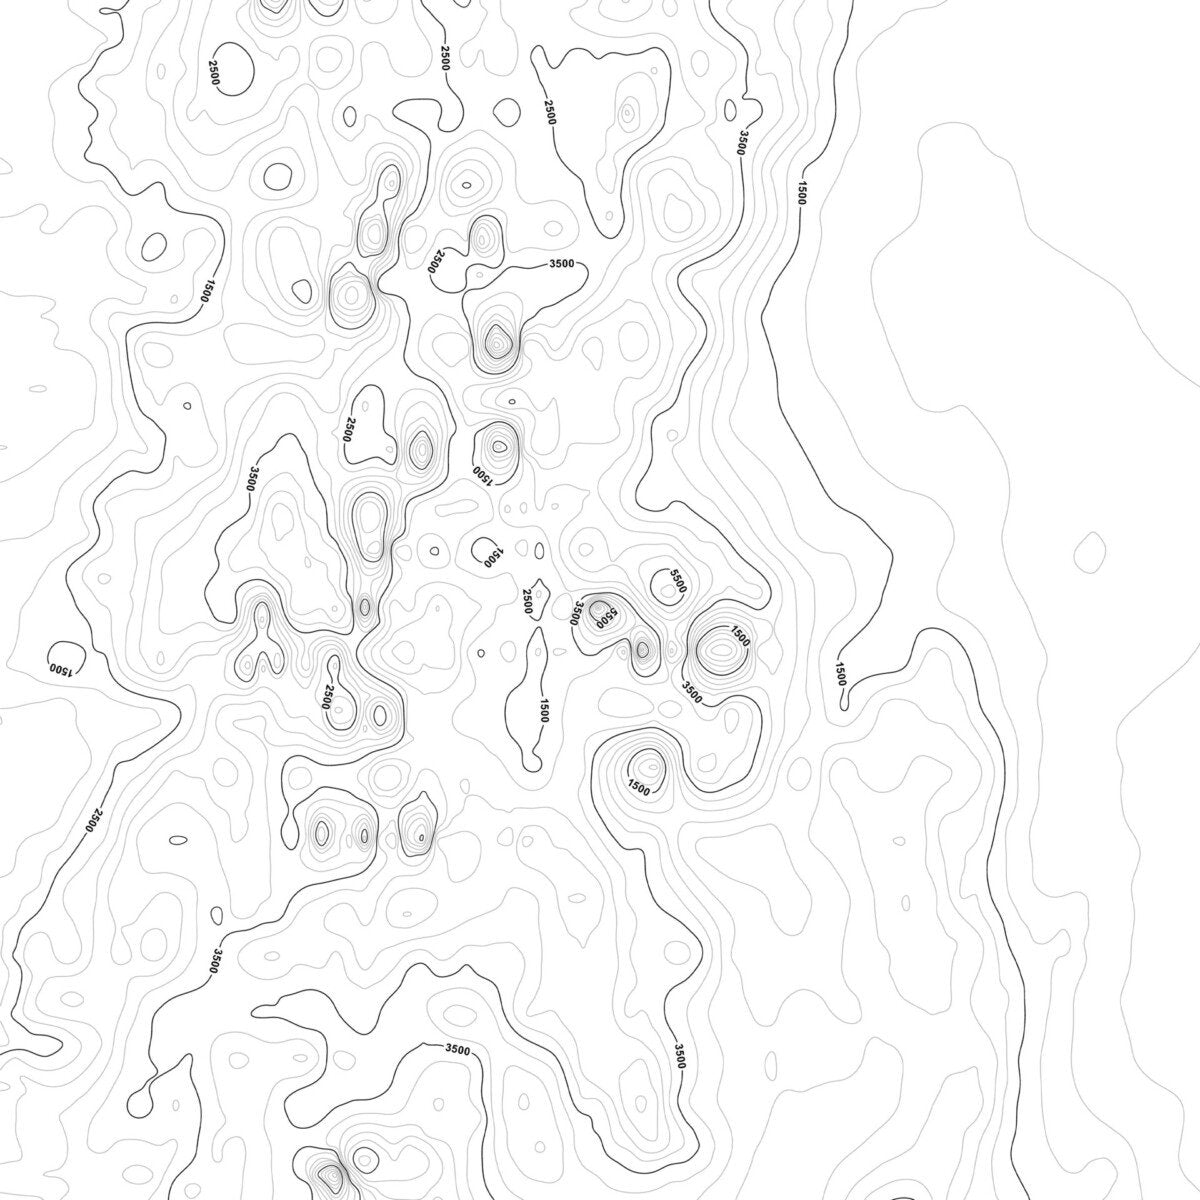 Mendoza Topographic Maps IV, Surface